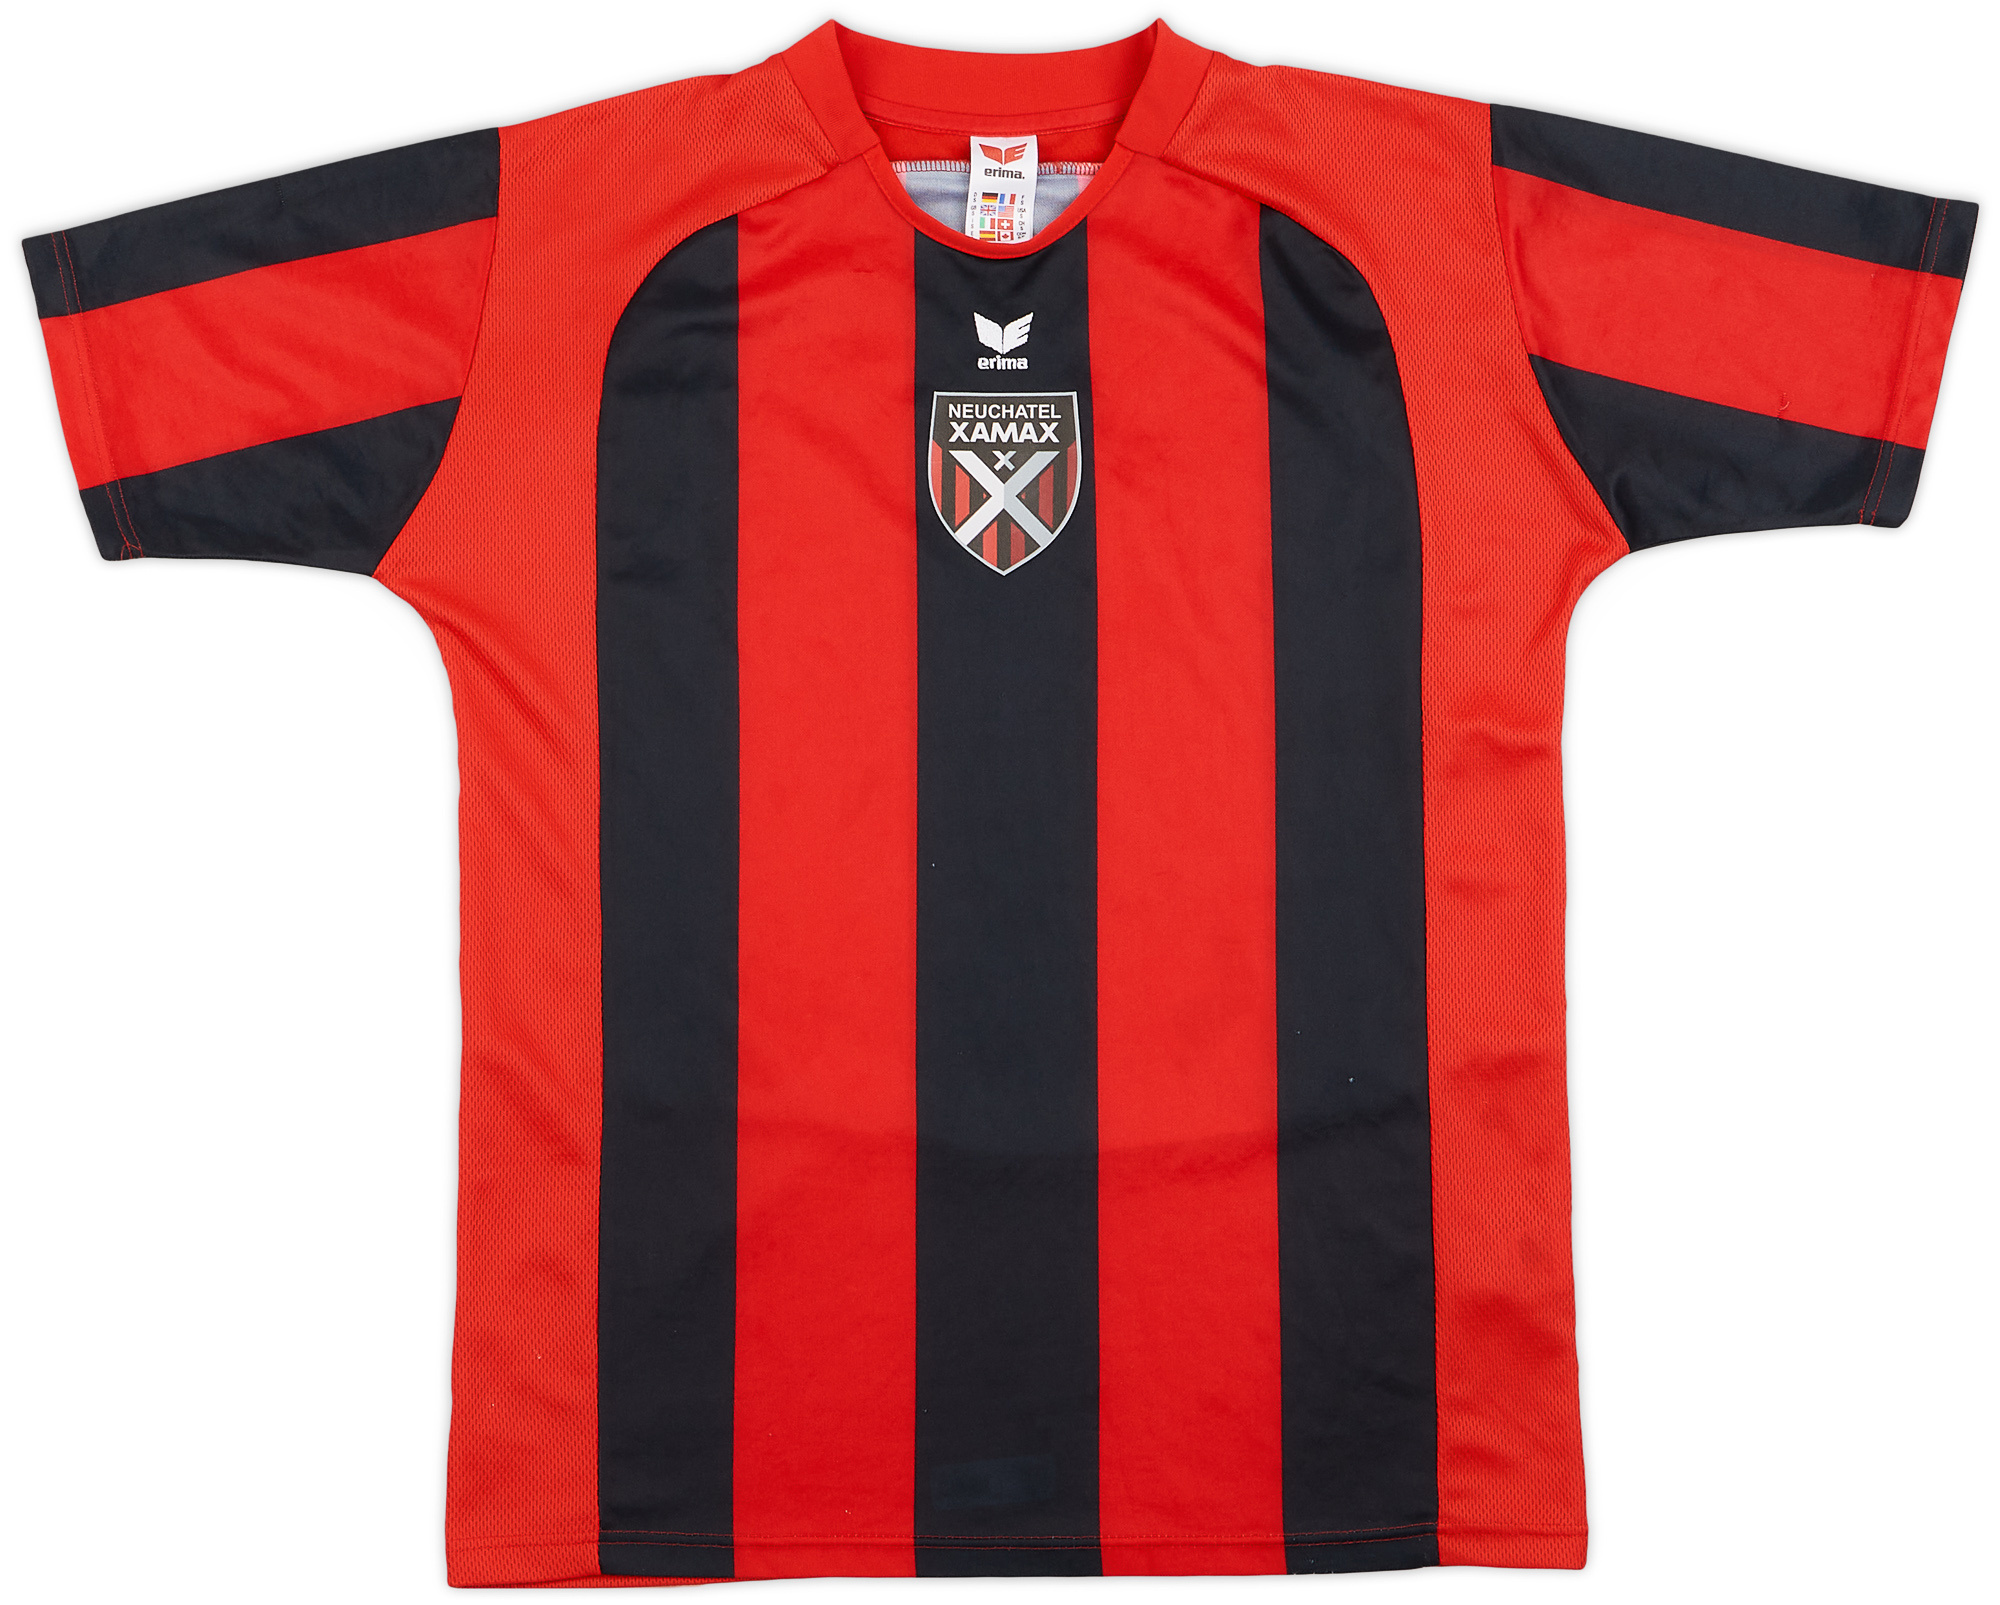 Retro Neuchâtel Xamax FC Shirt